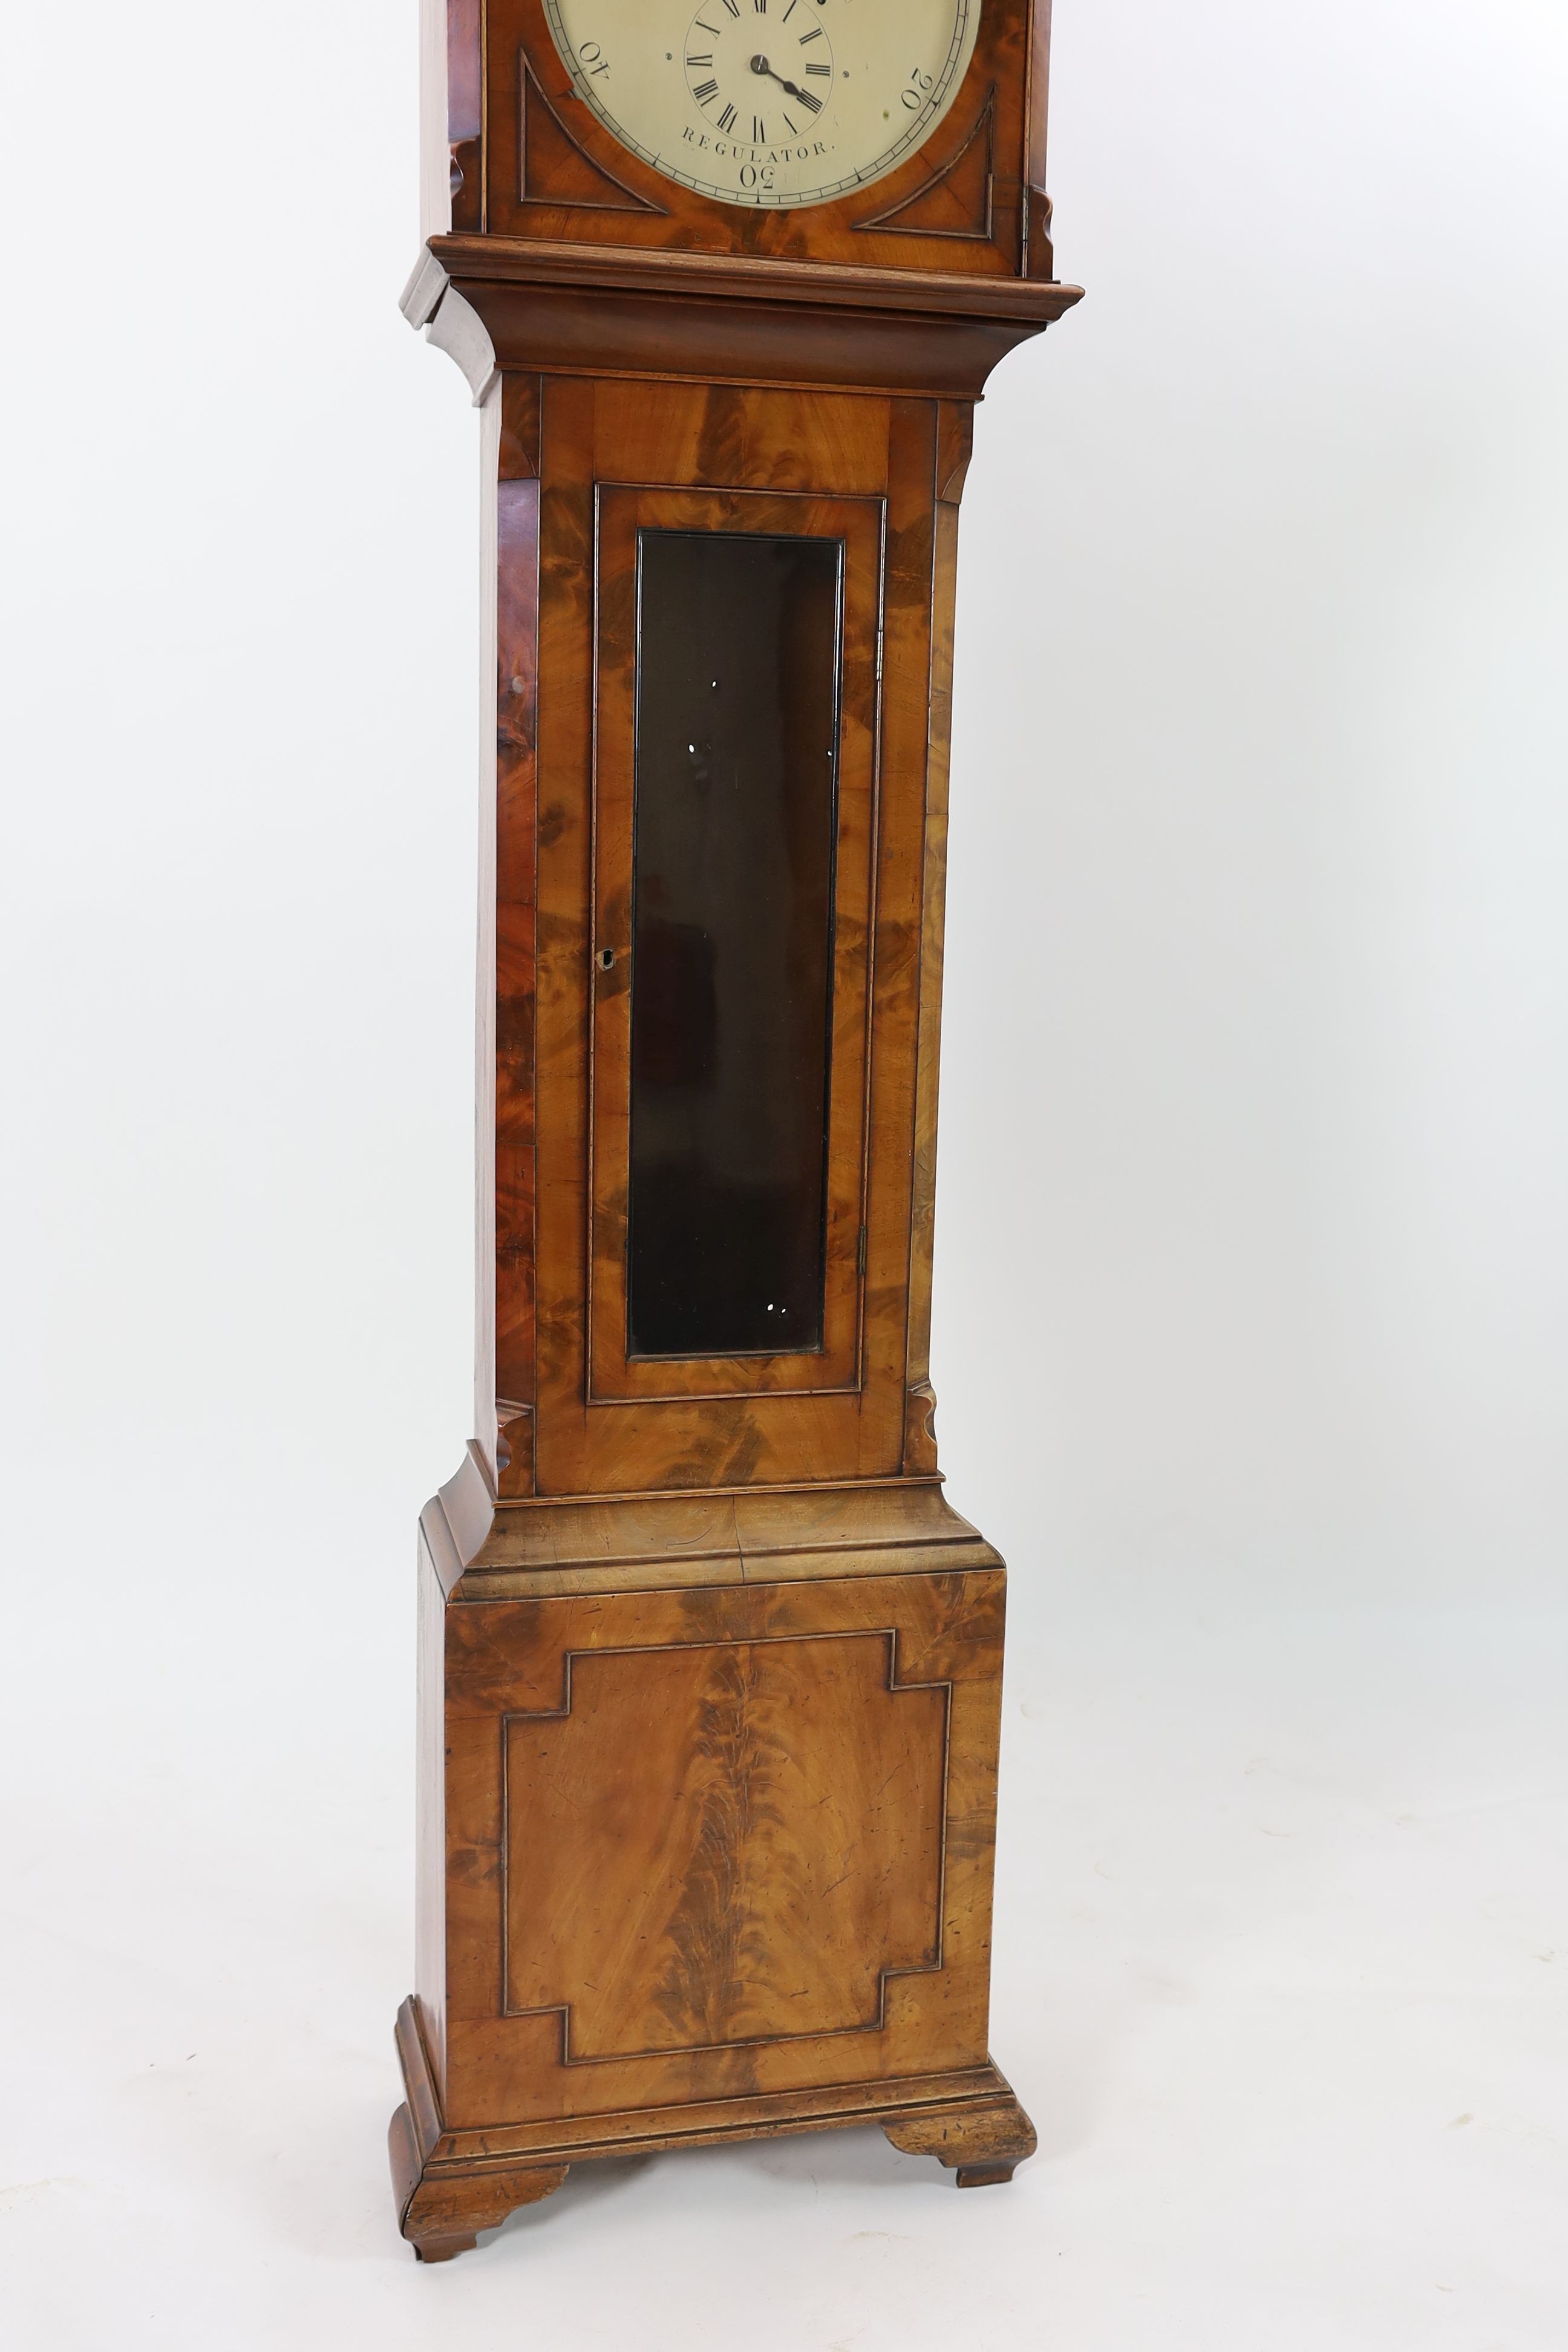 Rainforth & Son of Bridgewater. An early 19th century mahogany domestic regulator, H. 218cm.